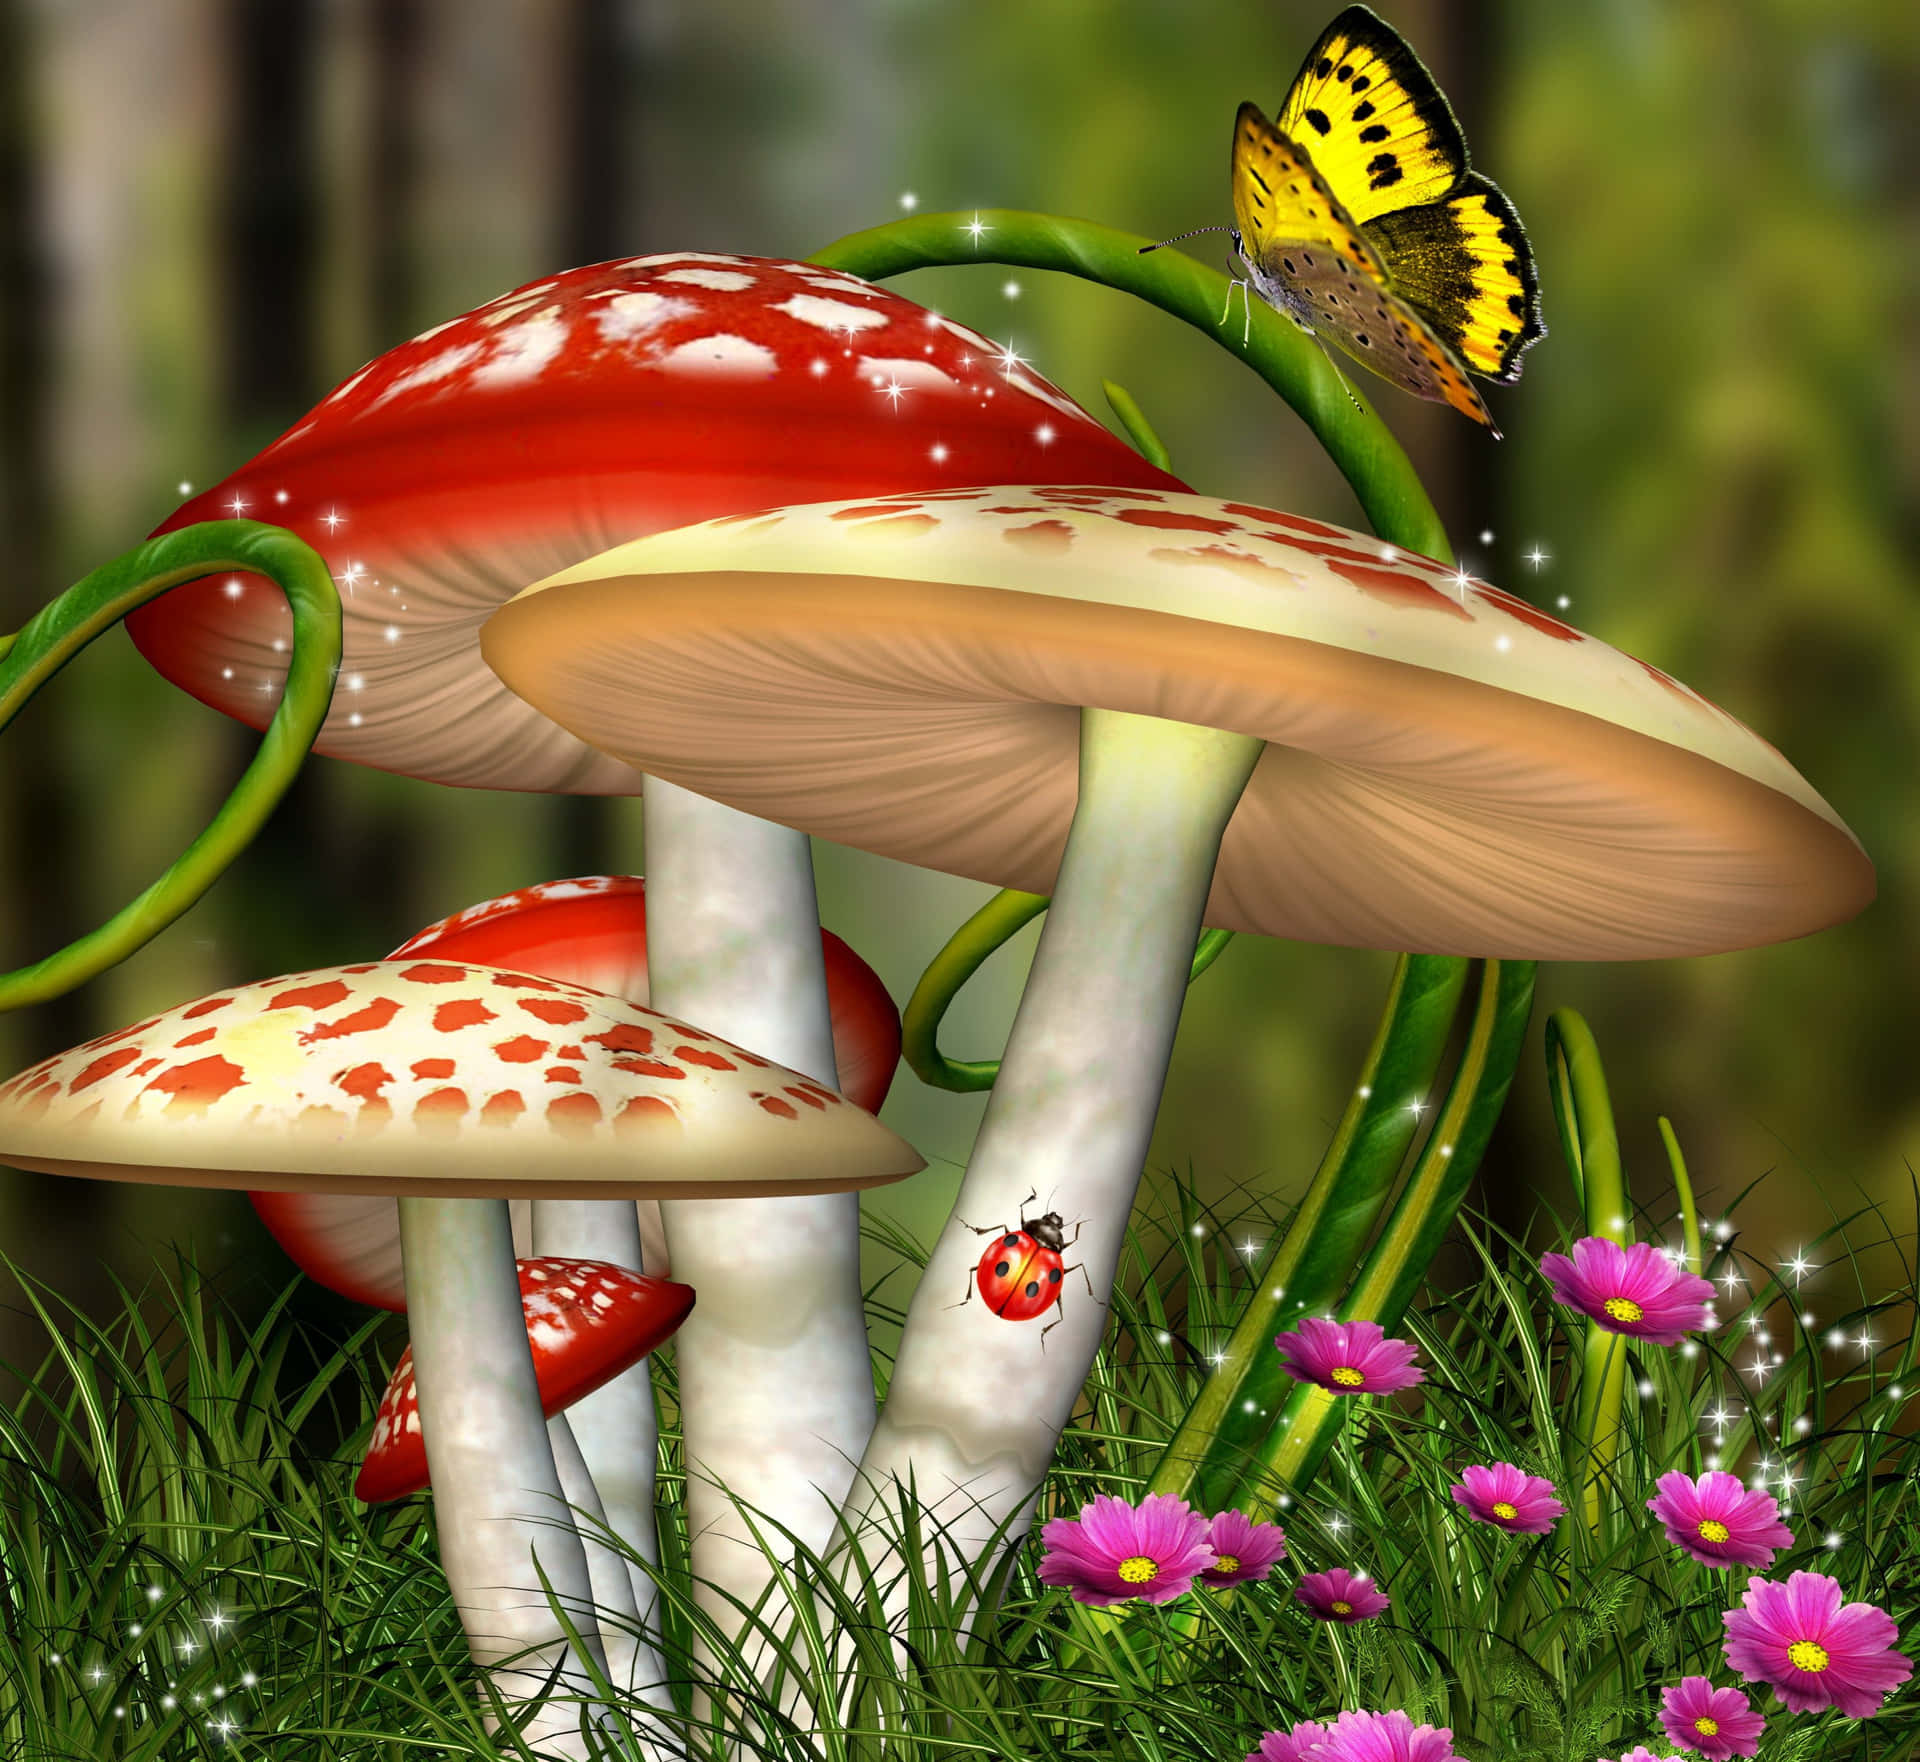 Adorable Kawaii Mushroom in a Magical Forest Wallpaper